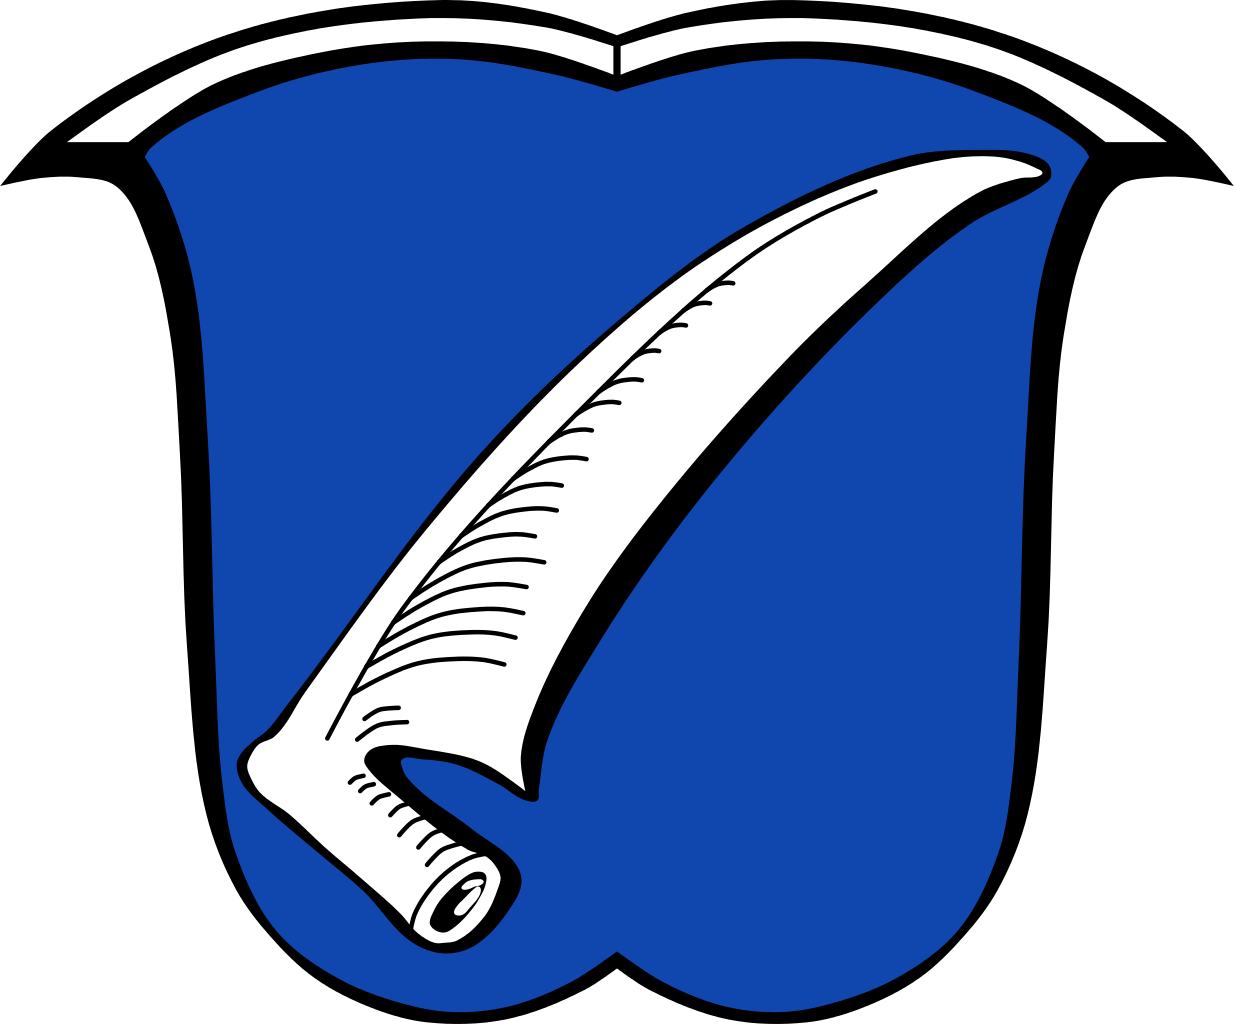 Wappen Oberding